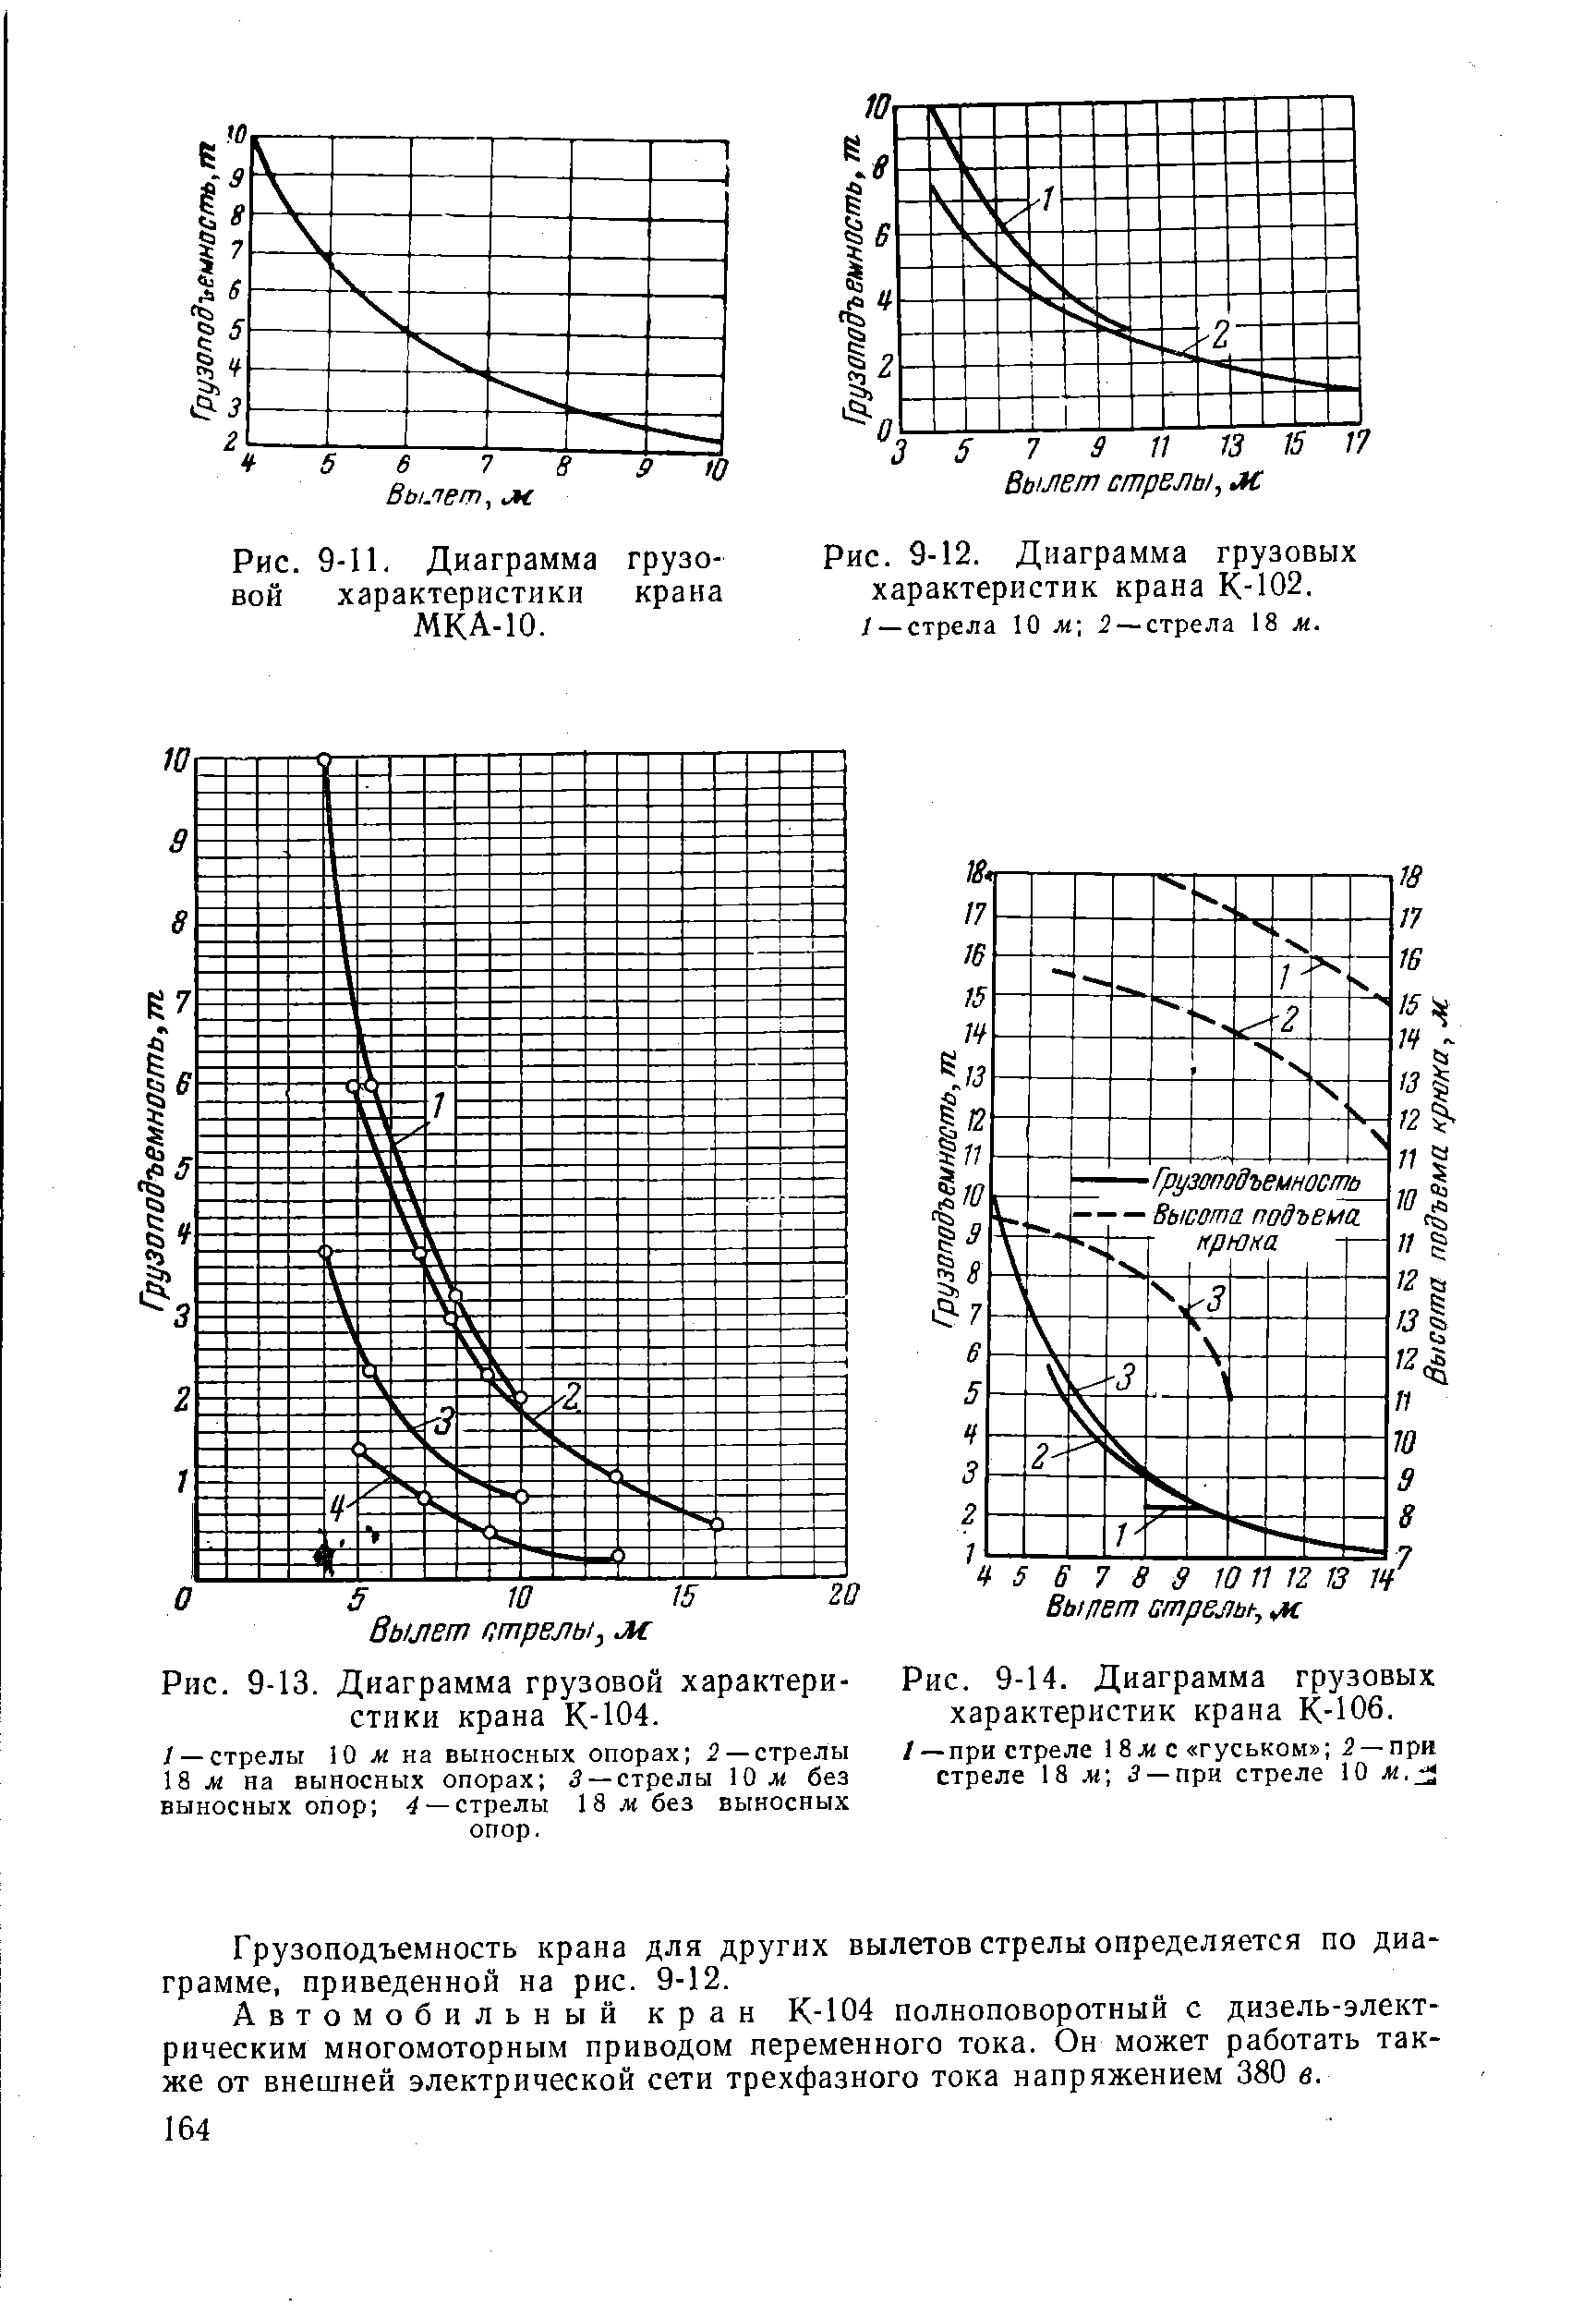 Рис. 9-14. Диаграмма <a href="/info/322212">грузовых характеристик</a> крана К-10б.
